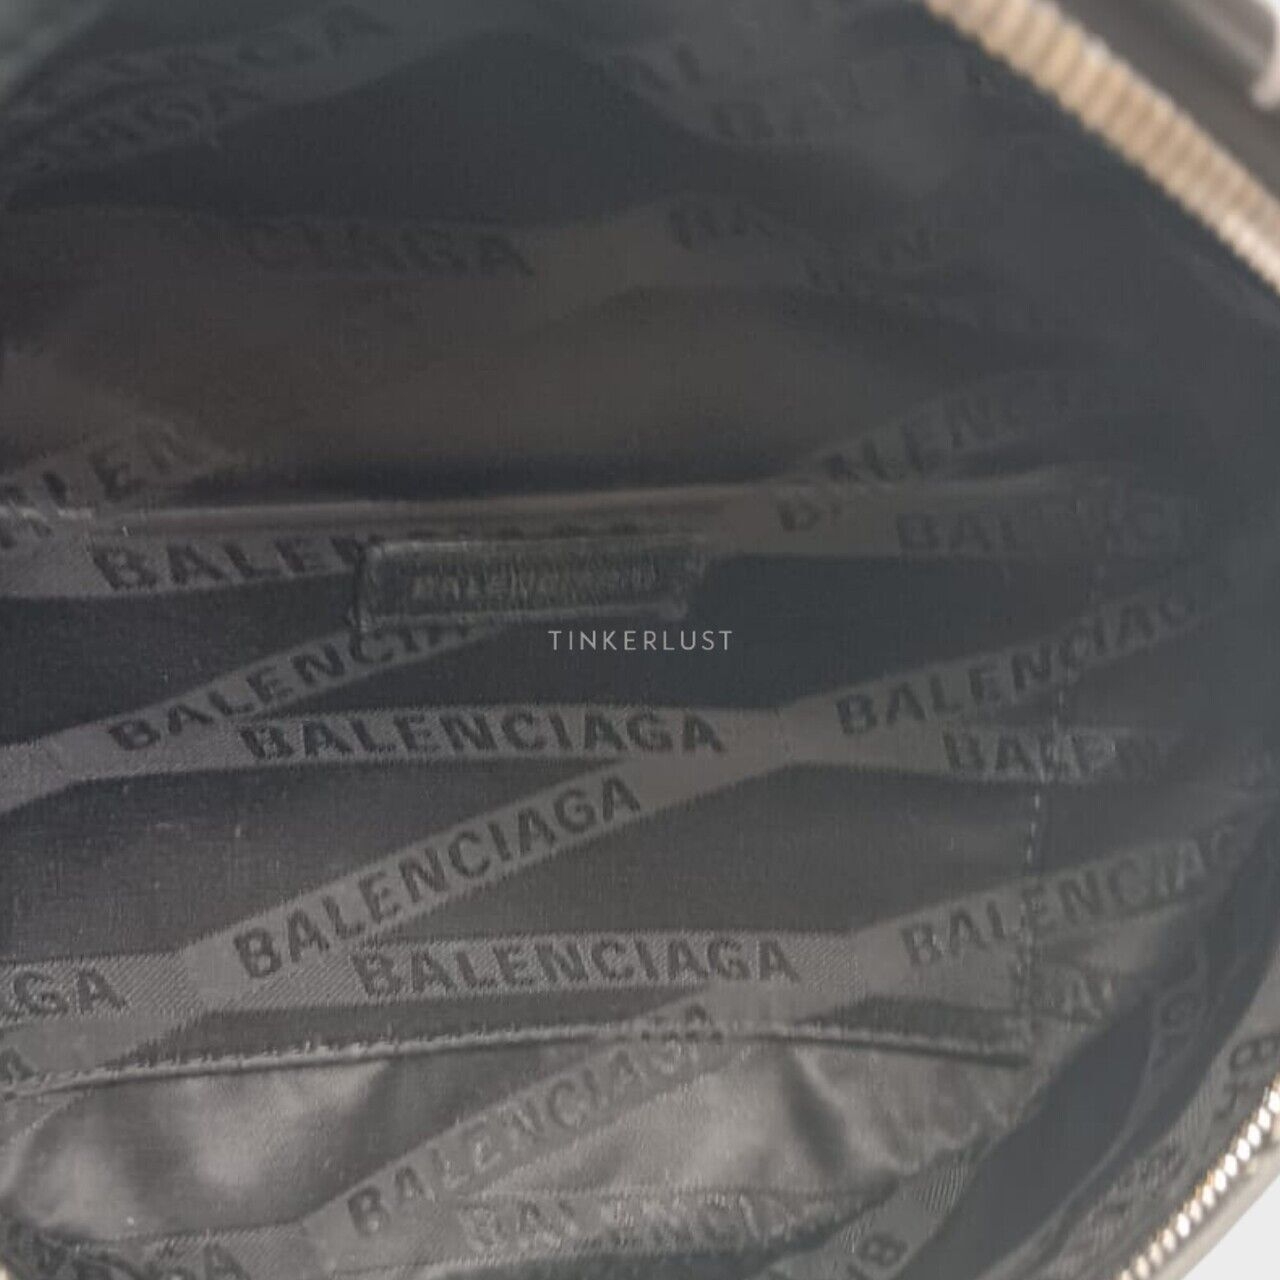 Balenciaga All Over Logo Bumbag Beltbag Black and White 2019 Sling Bag